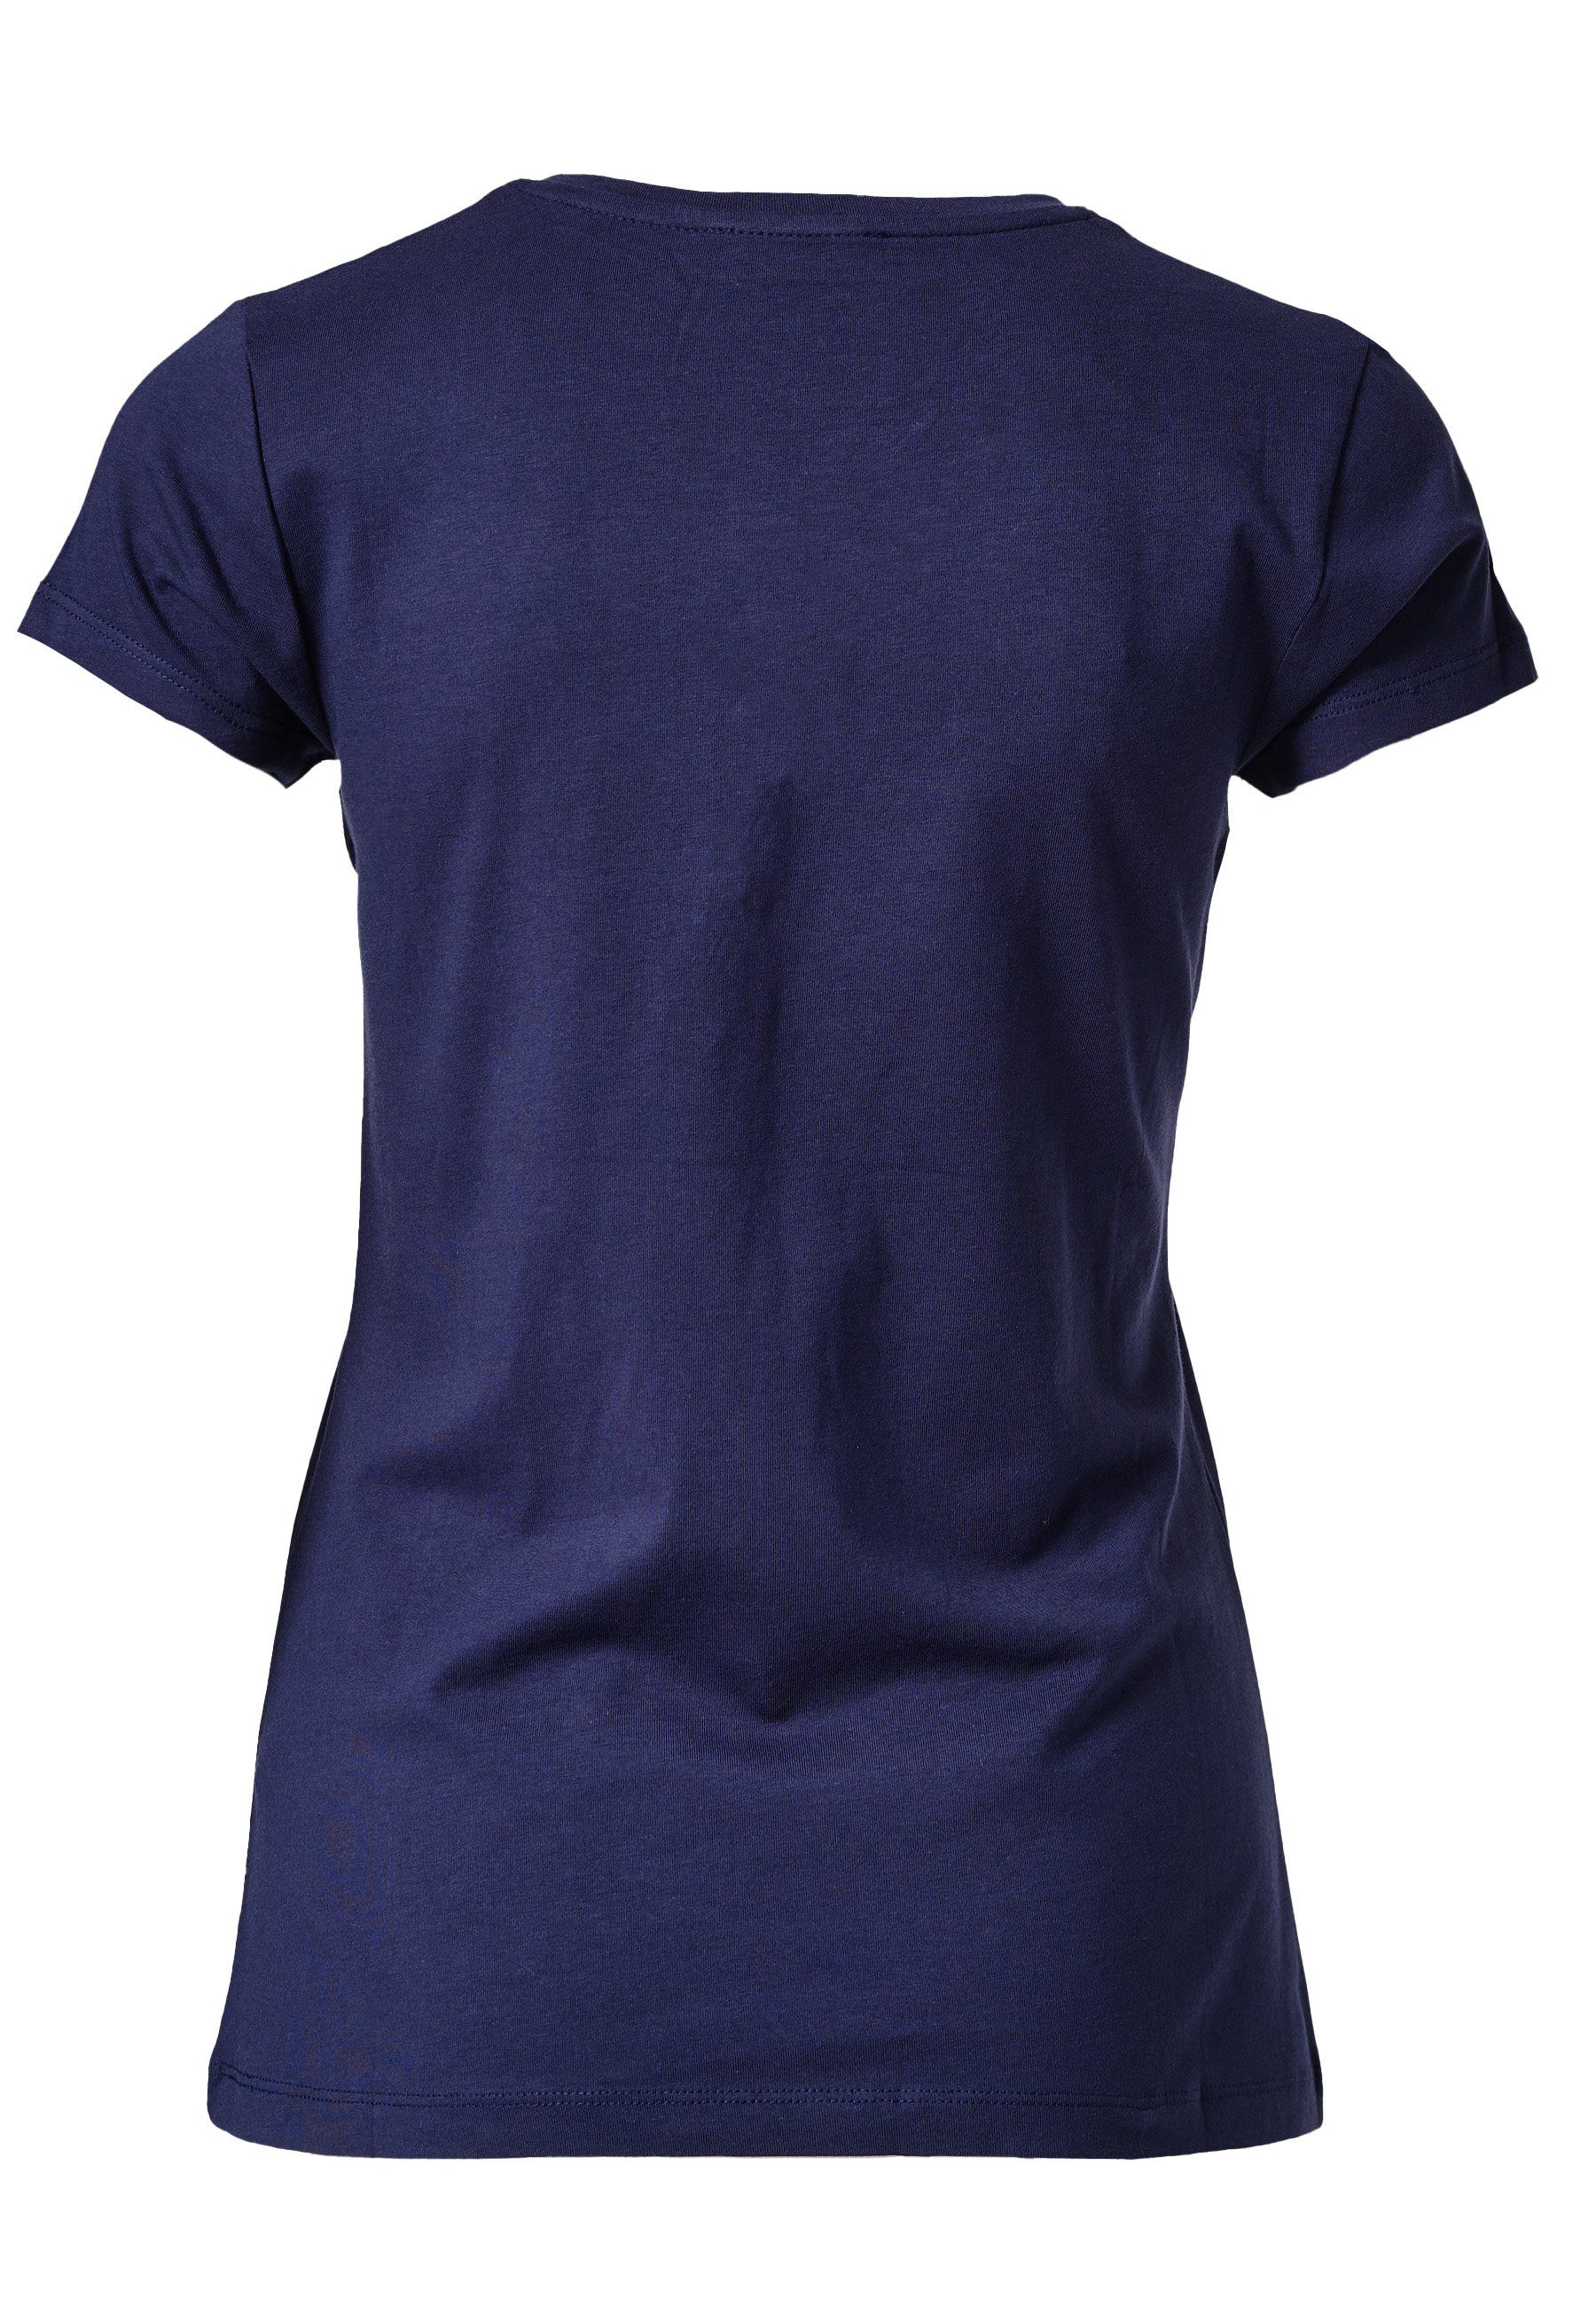 Decay T-Shirt blau Front-Print mit